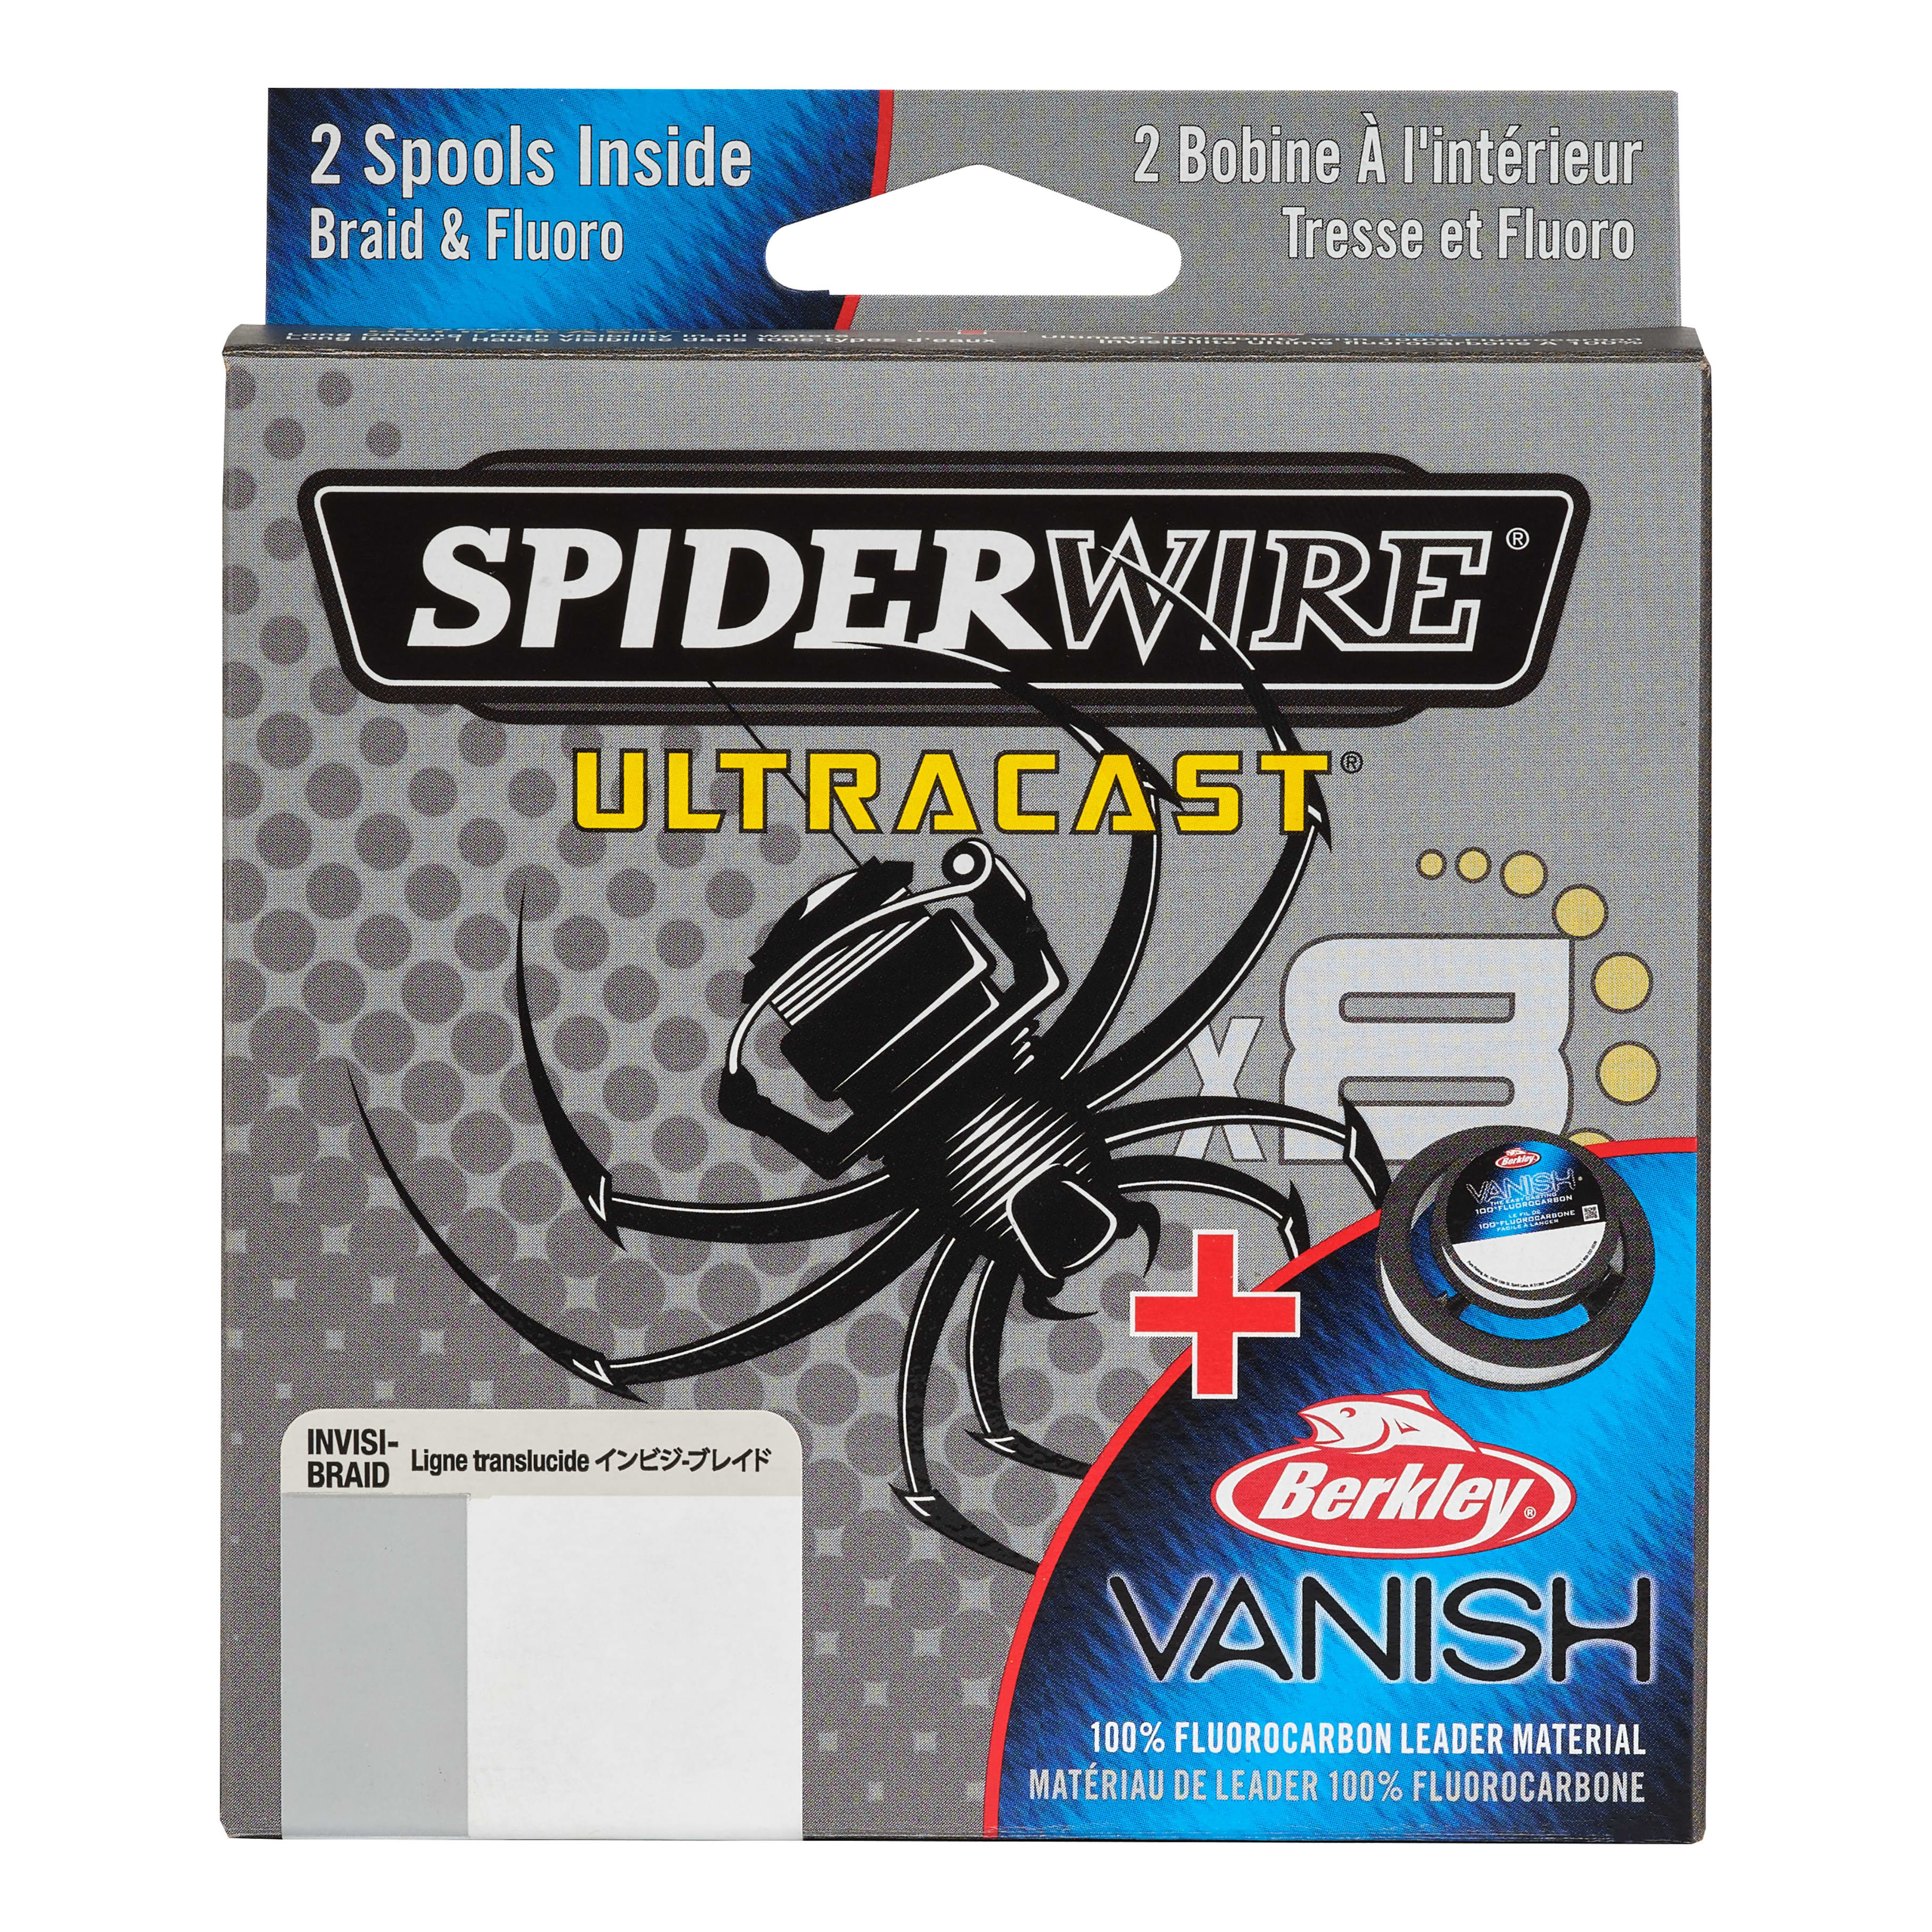 Spiderwire® Ultracast® Berkley® Vanish® Dual Spool